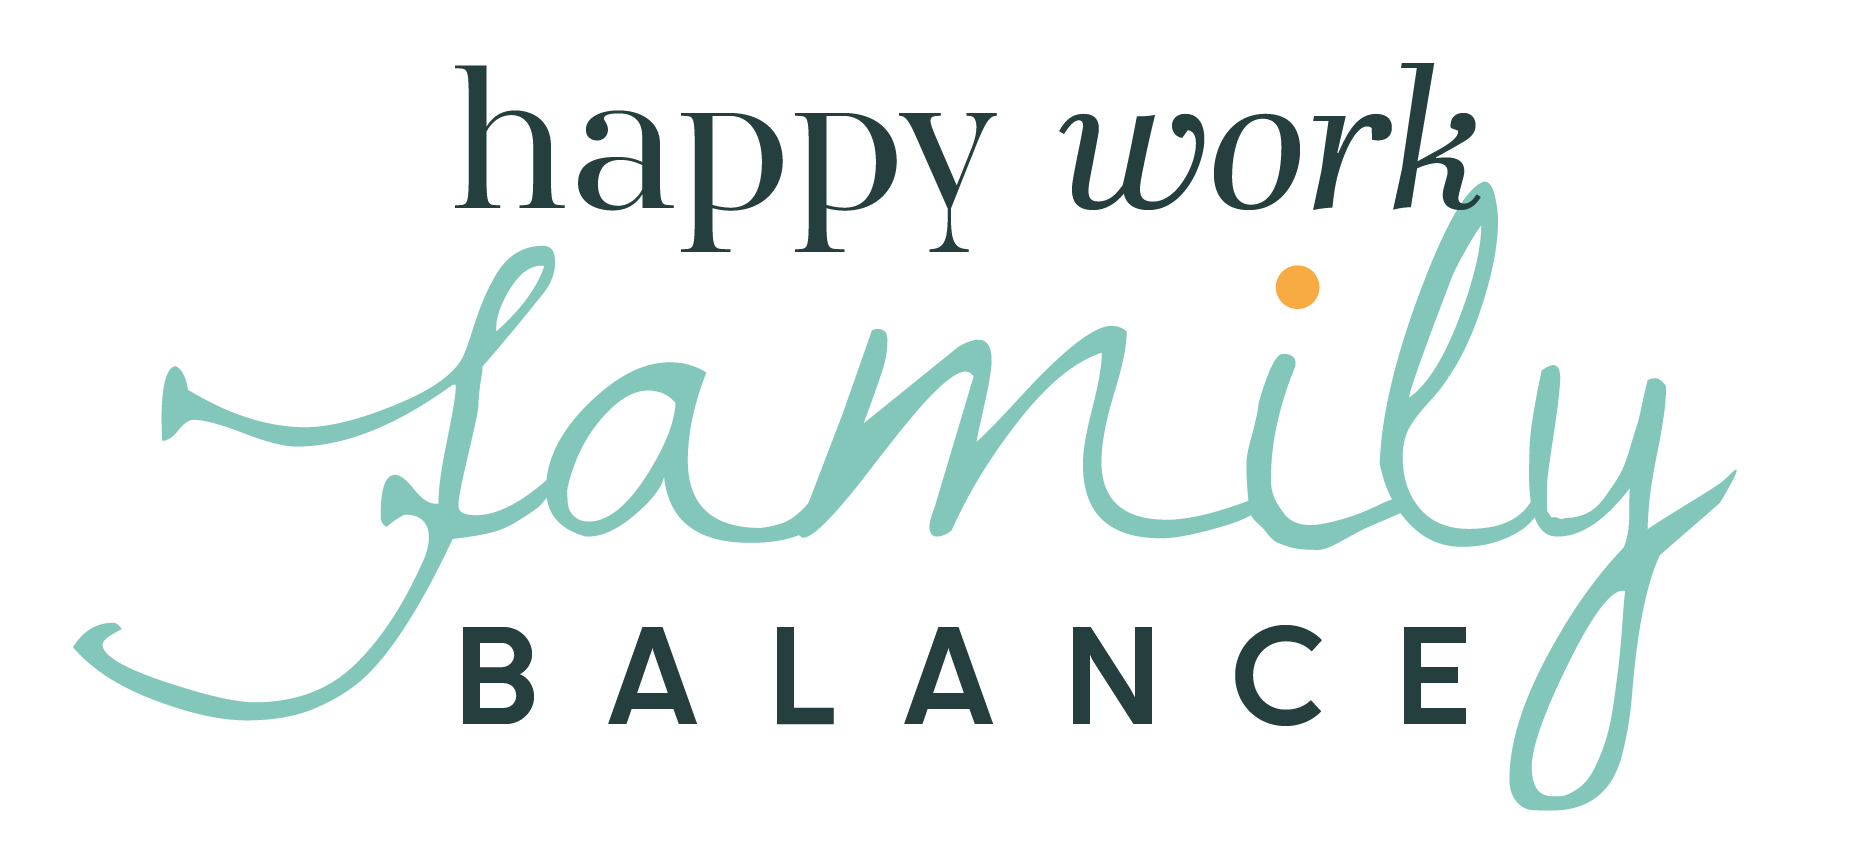 Happy Work Family Balance